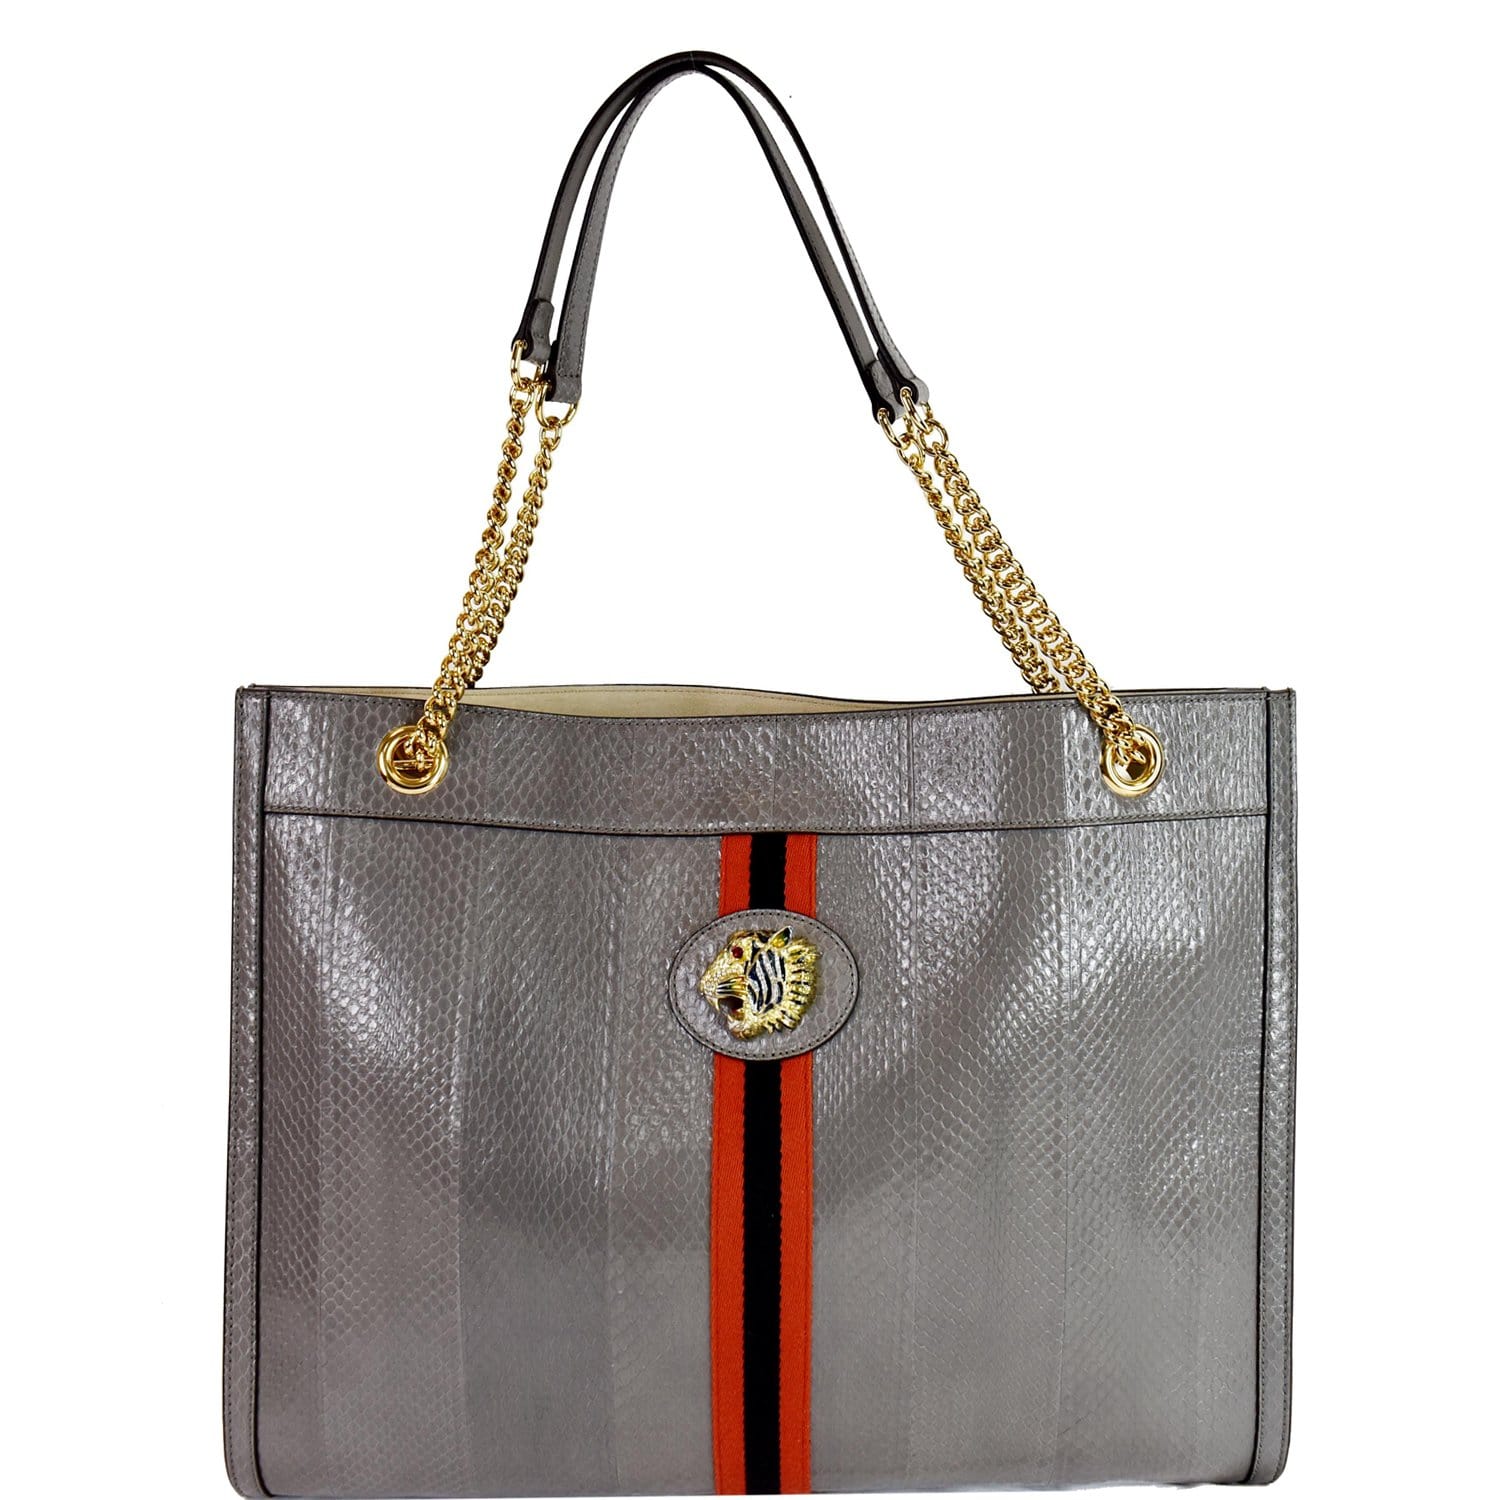 Gucci Snakeskin Style Handbag, Nwot Auction